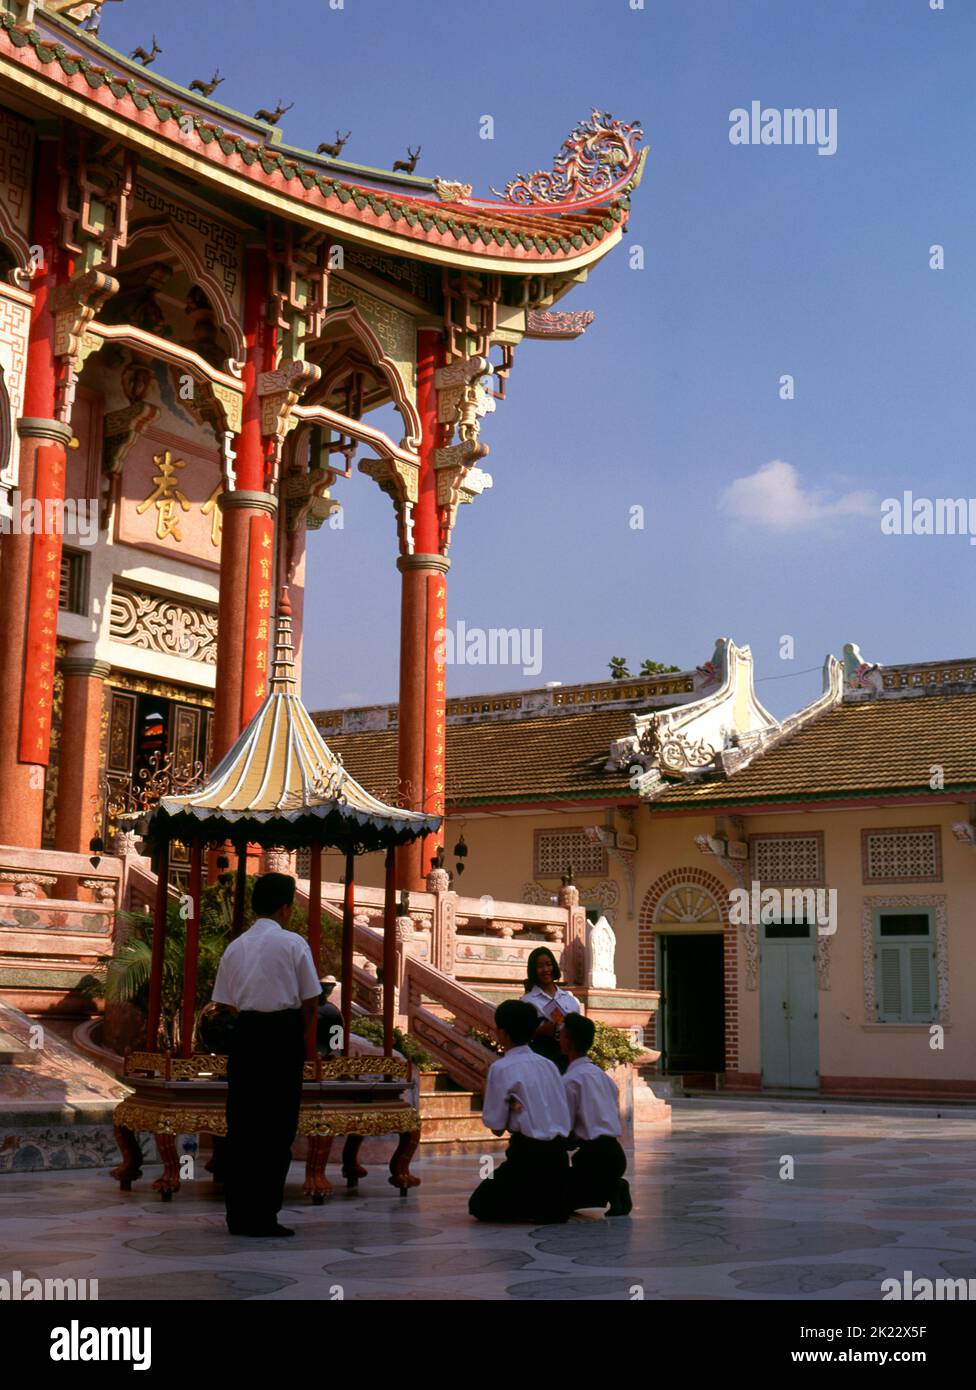 Thailandia: Il viharn principale (sala di riunione), Wat Pho Maen Khunaram, Bangkok. Wat Pho Maen Khunaram è un tempio buddista Mahayana costruito nel 1959. Mescola stili architettonici thailandesi, cinesi e tibetani. Foto Stock